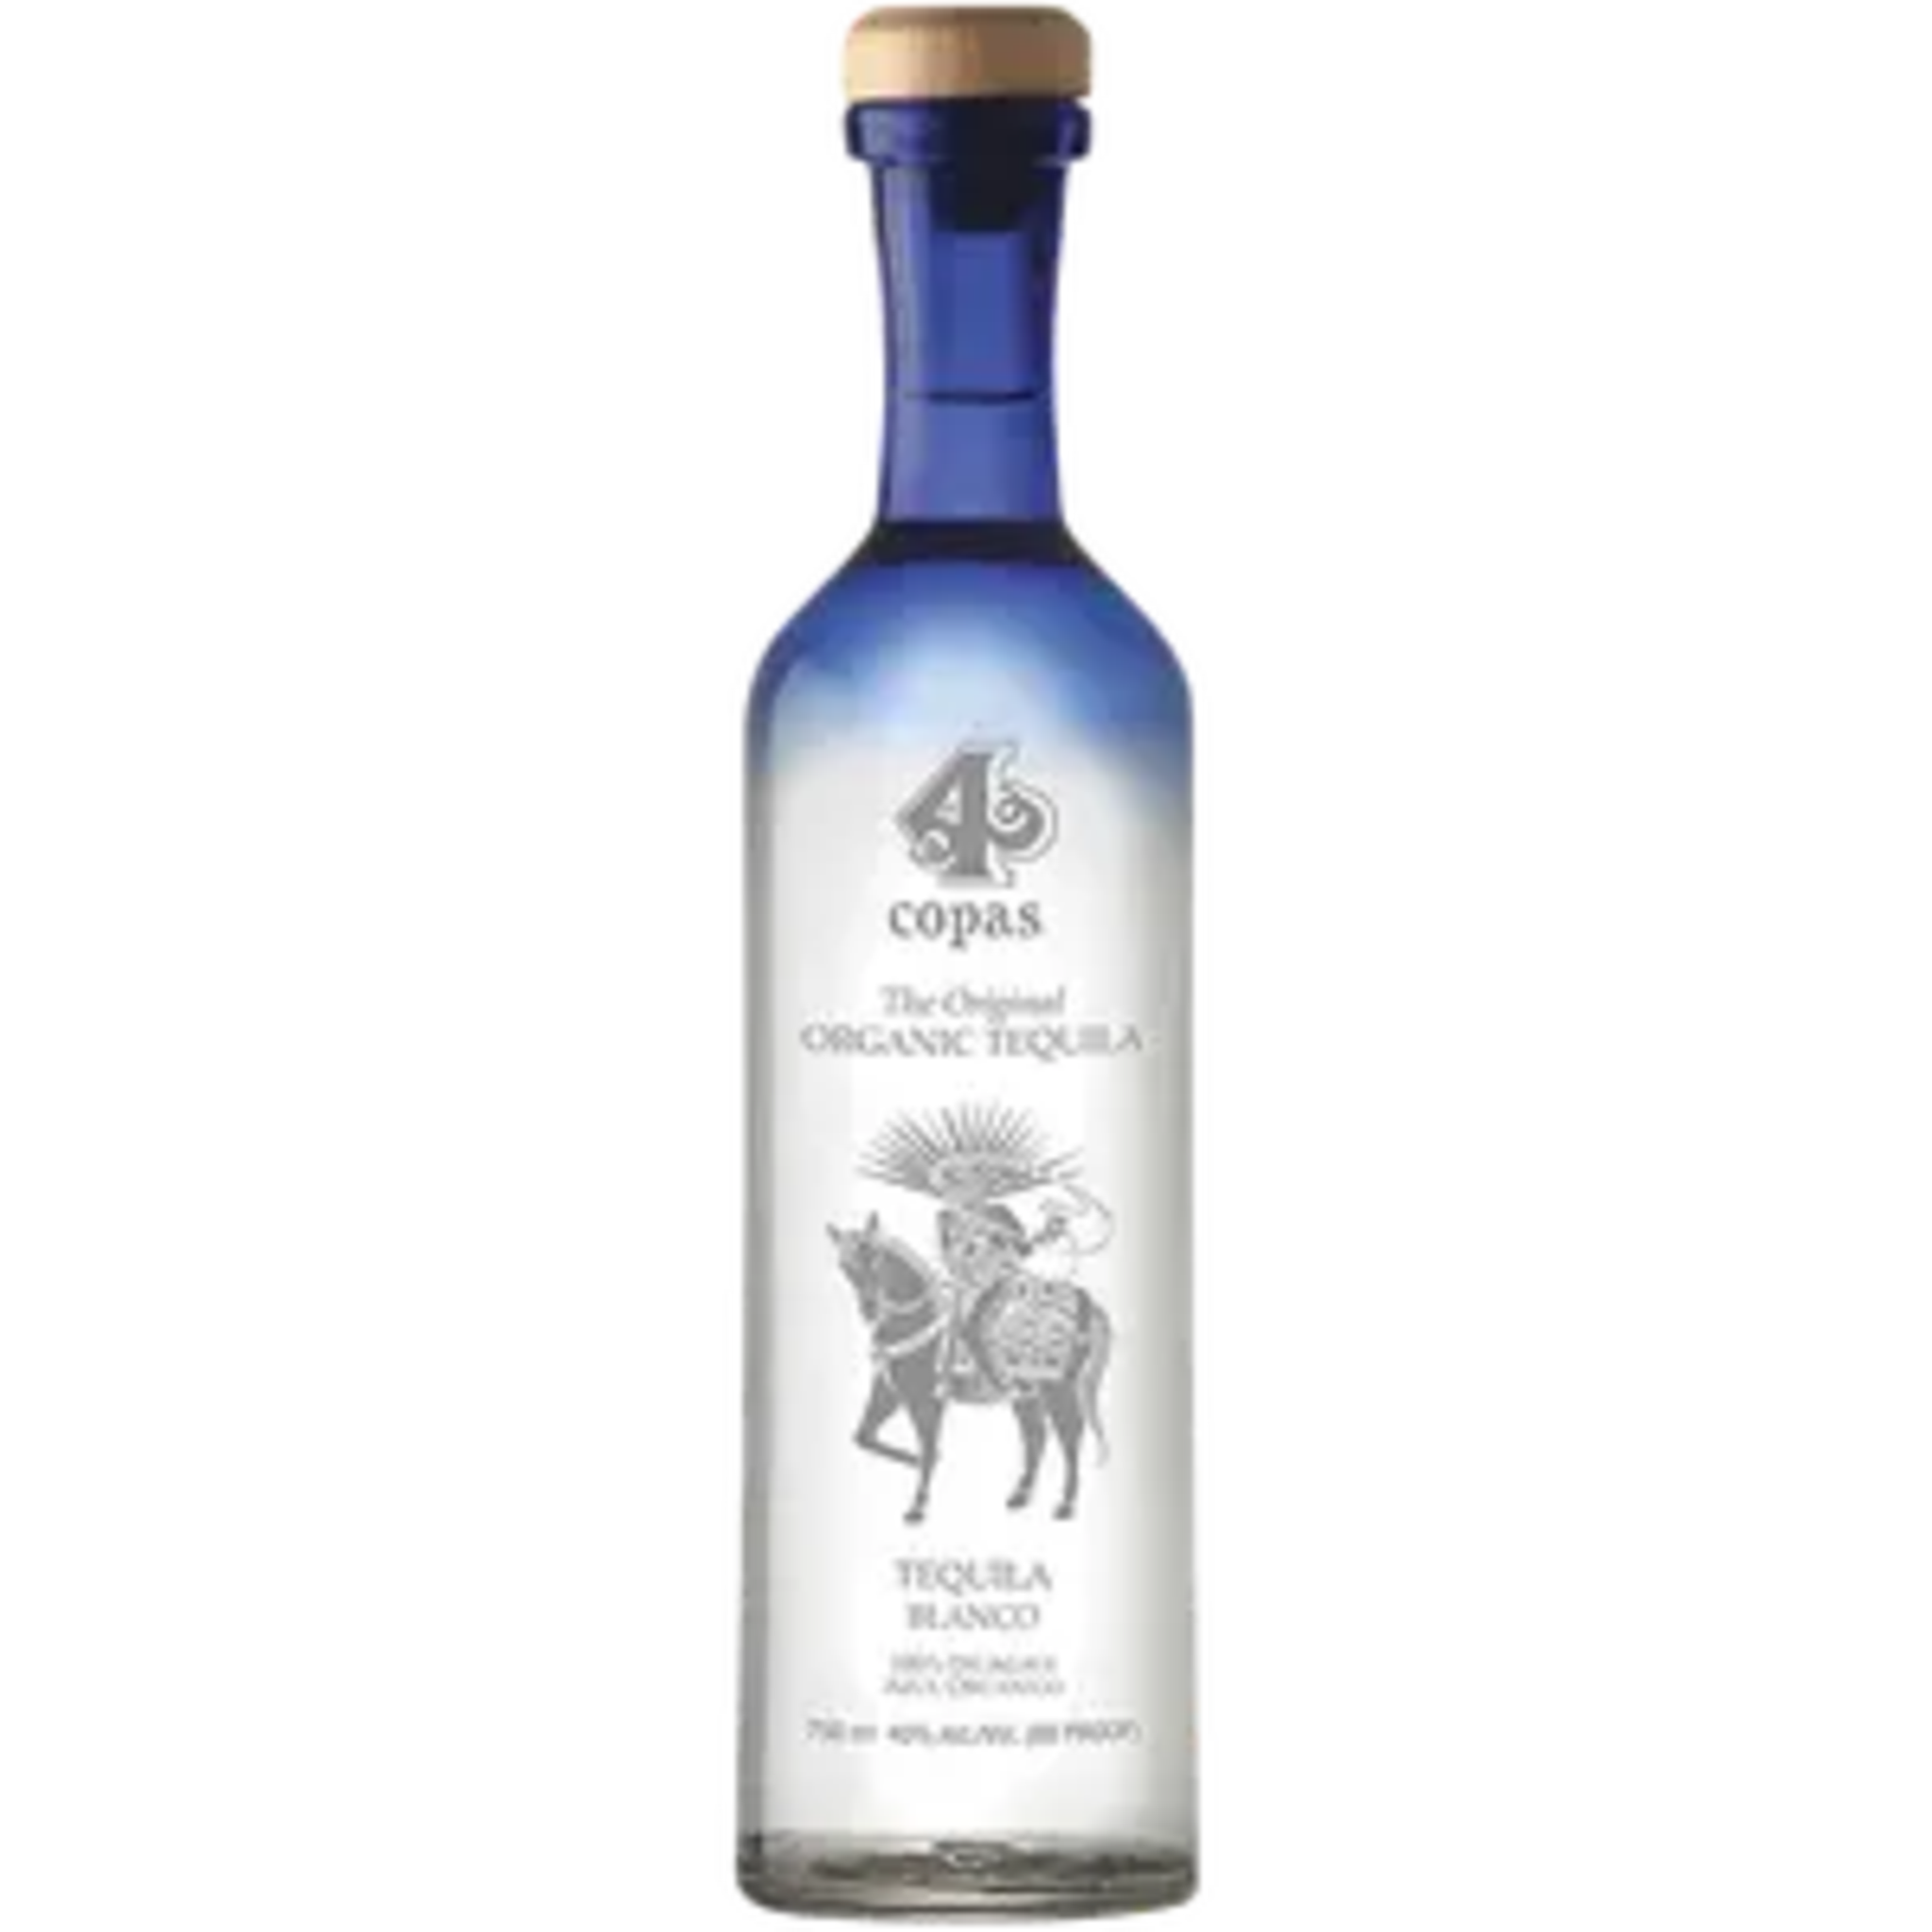 4 Copas Organic Blanco Tequila